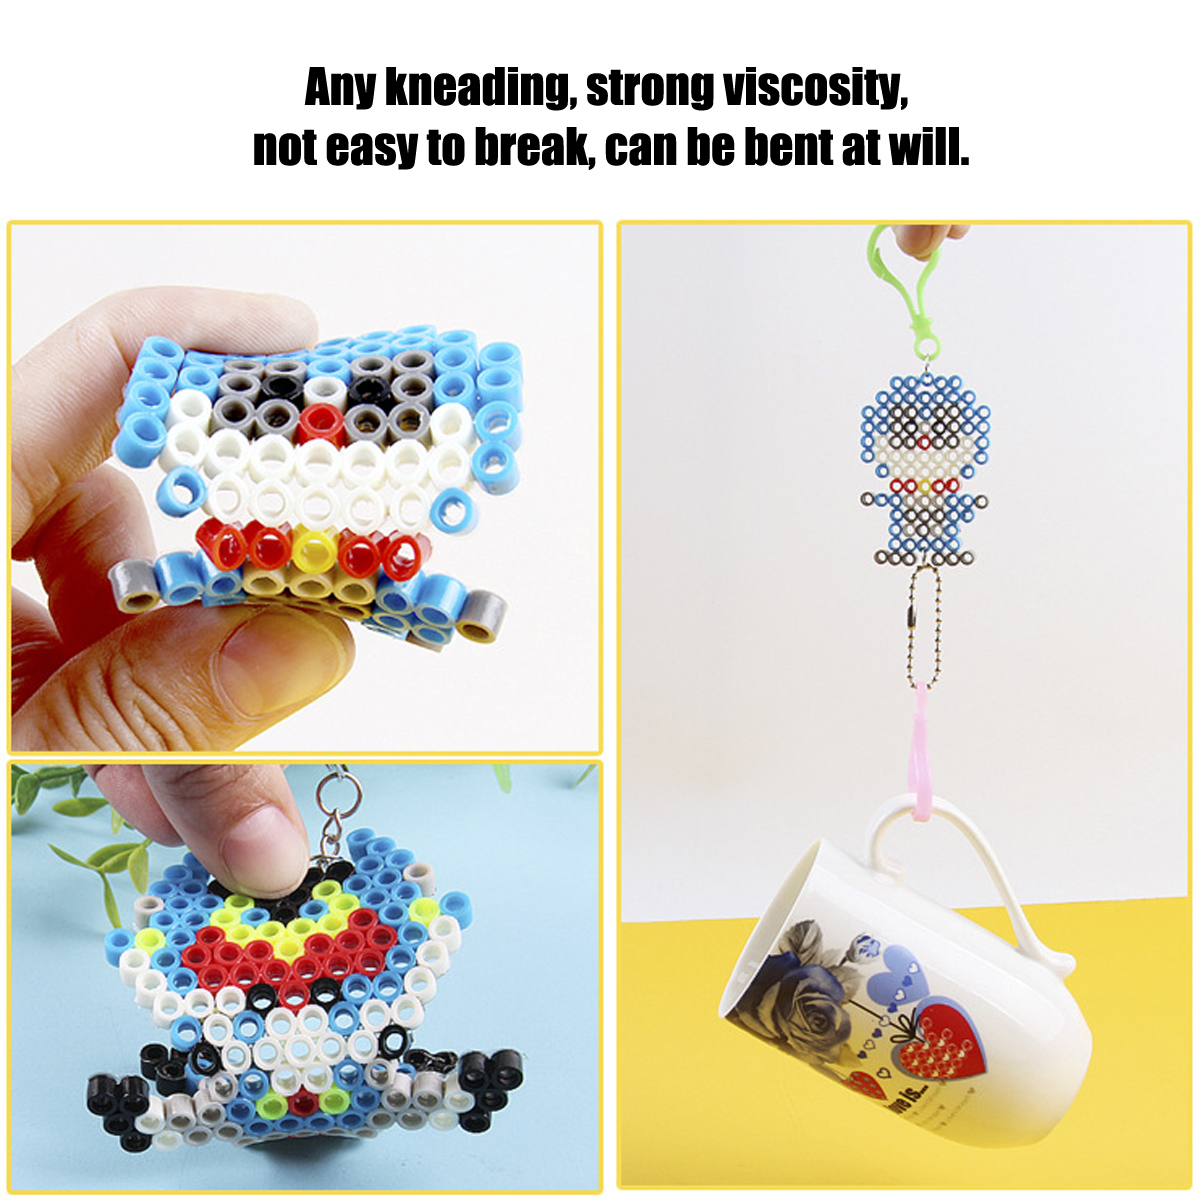 10-Grid-2-1500pcs-DIY-Fuse-Beads-Water-Sticky-Beads-Art-Craft-Toys-Kids-1421446